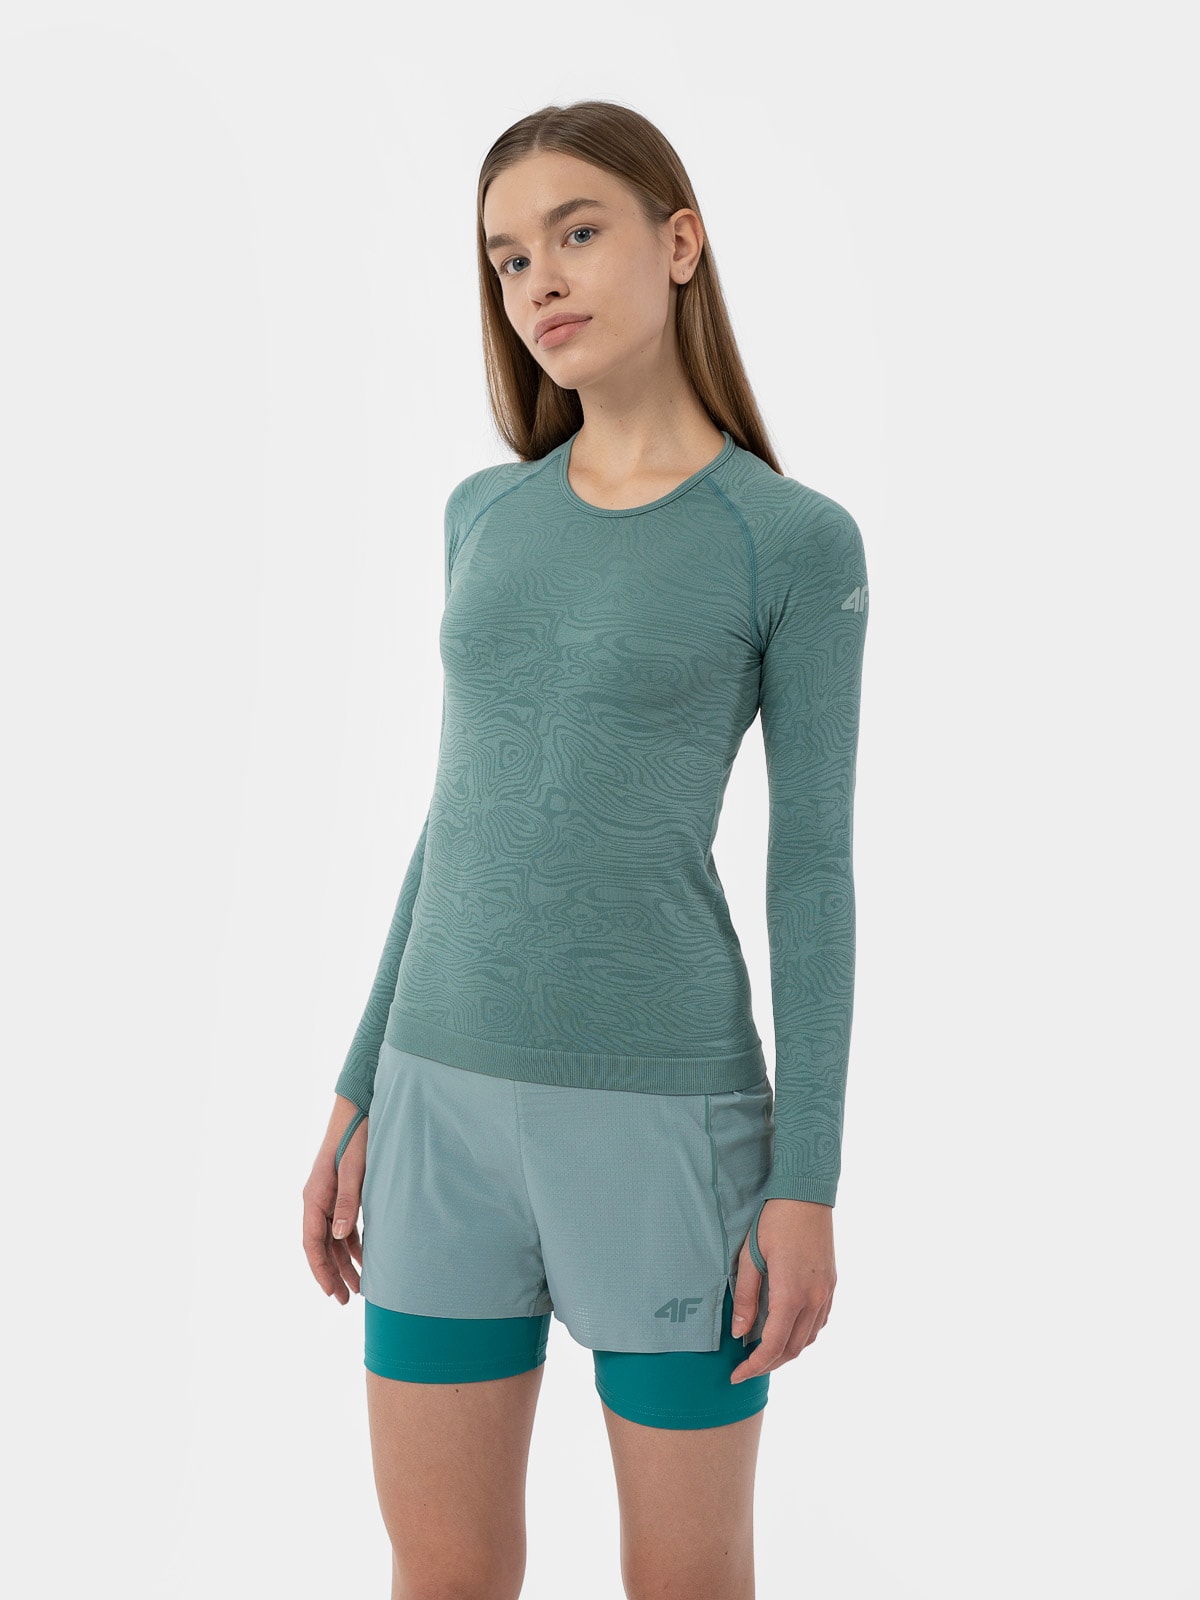 Dámske bezšvové bežecké tričko s dlhým rukávom na trail running